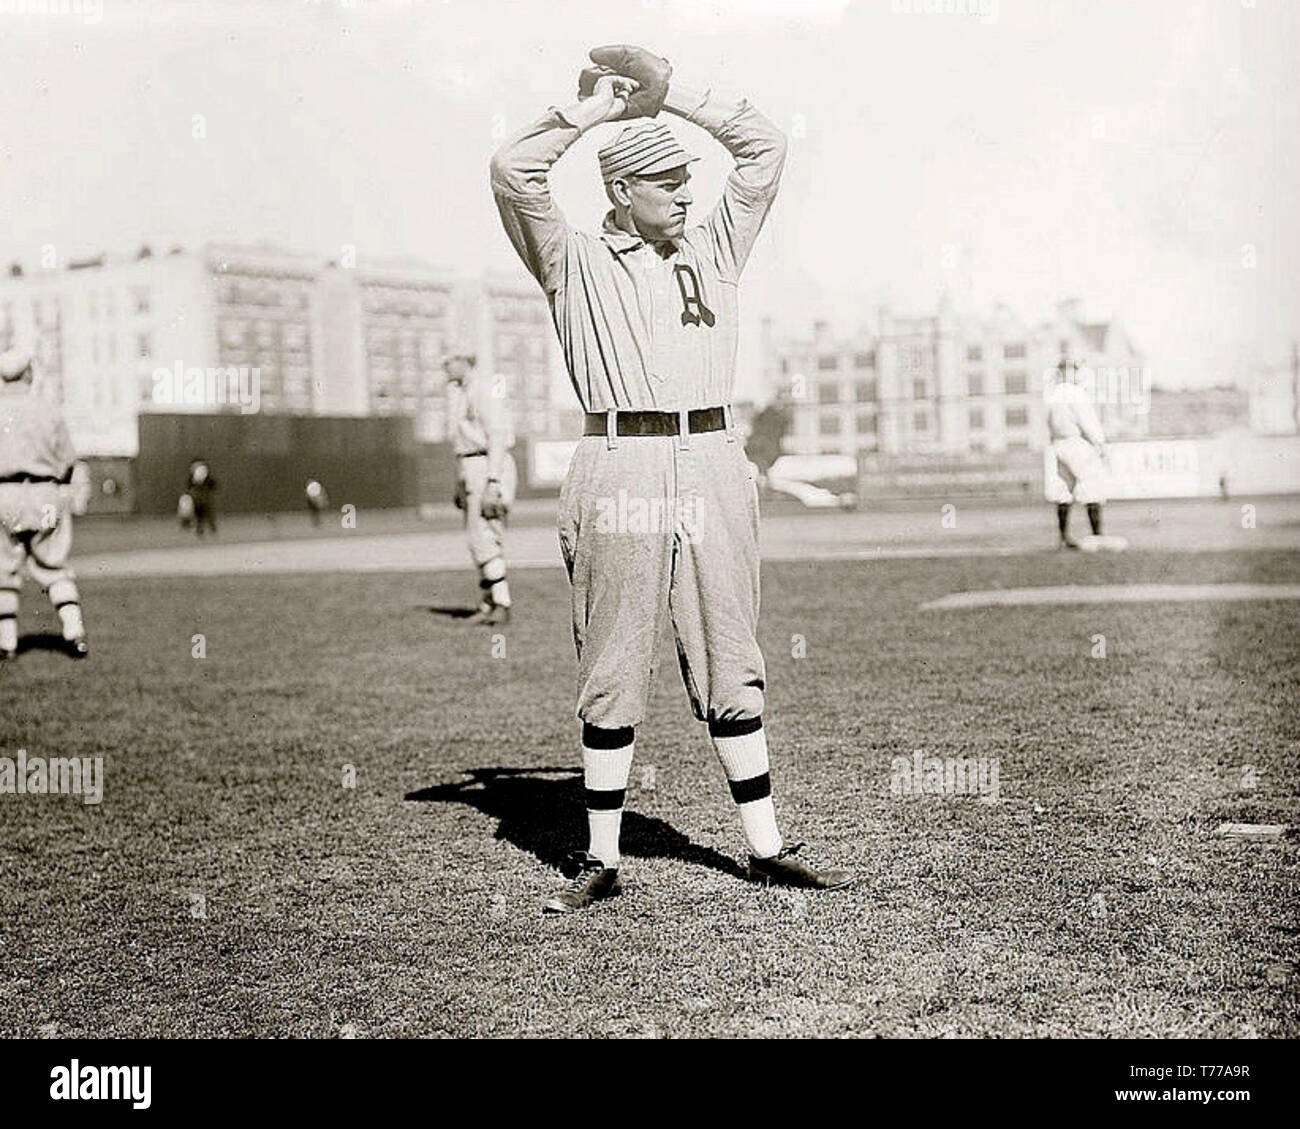 Cy Morgan, Philadelphia Athletics, 1910. Stock Photo